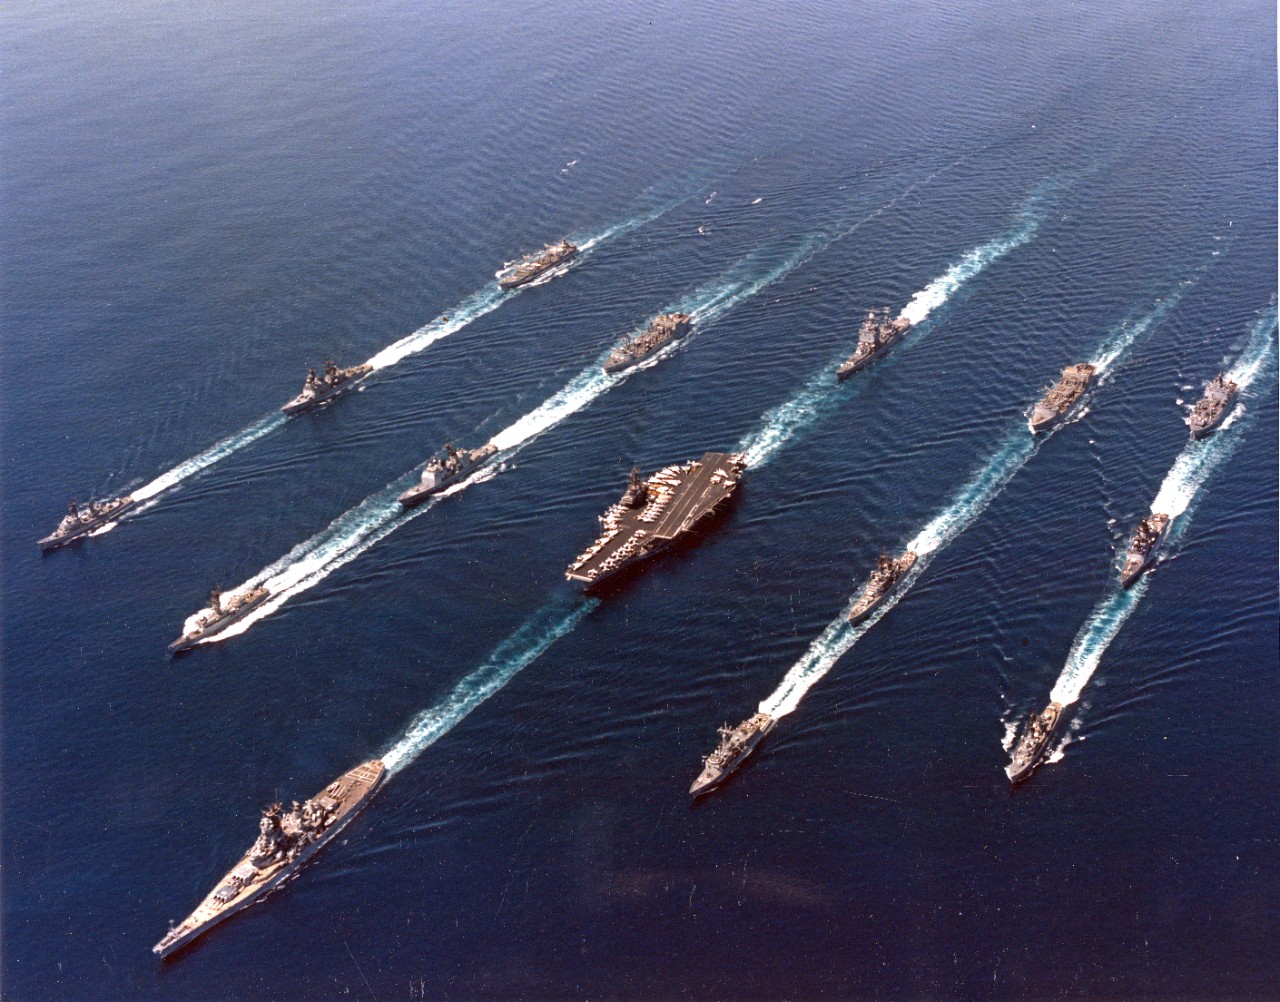 naval battle group